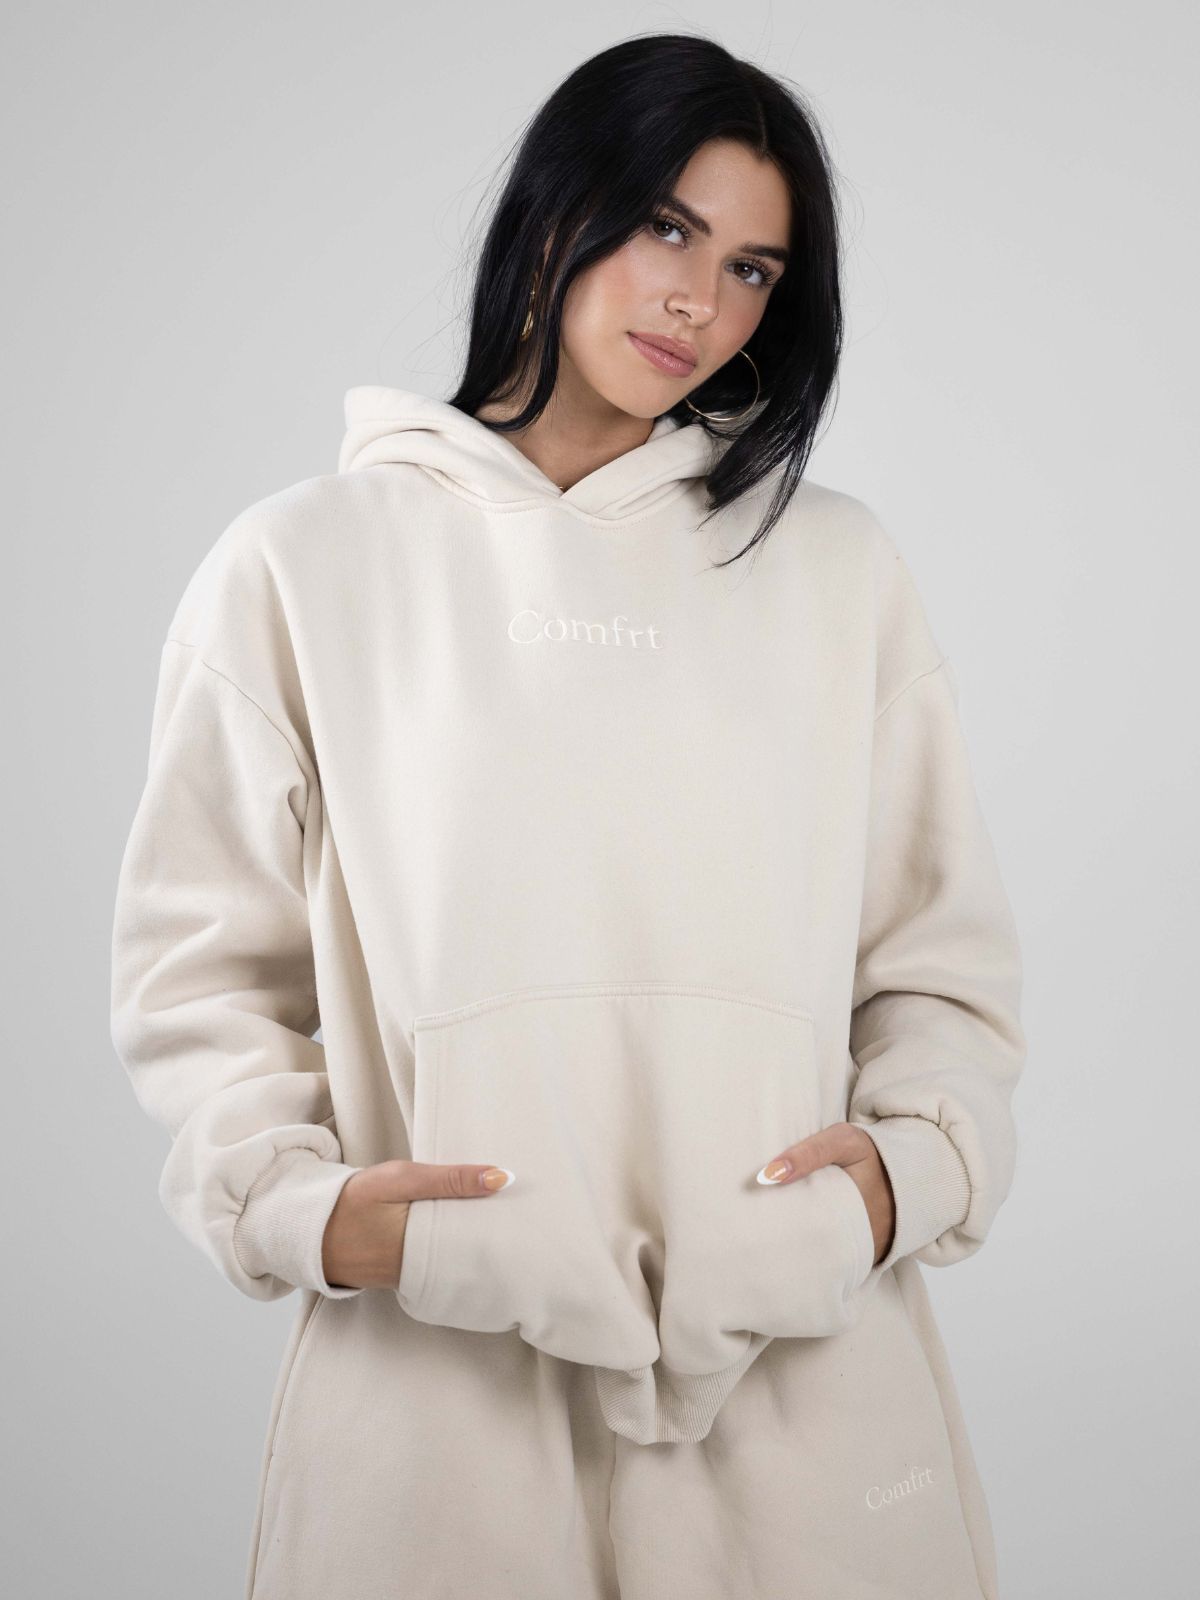 NEW Comfrt Clothing SIGNATURE Hoodie Size Medium Bark Sweatshirt